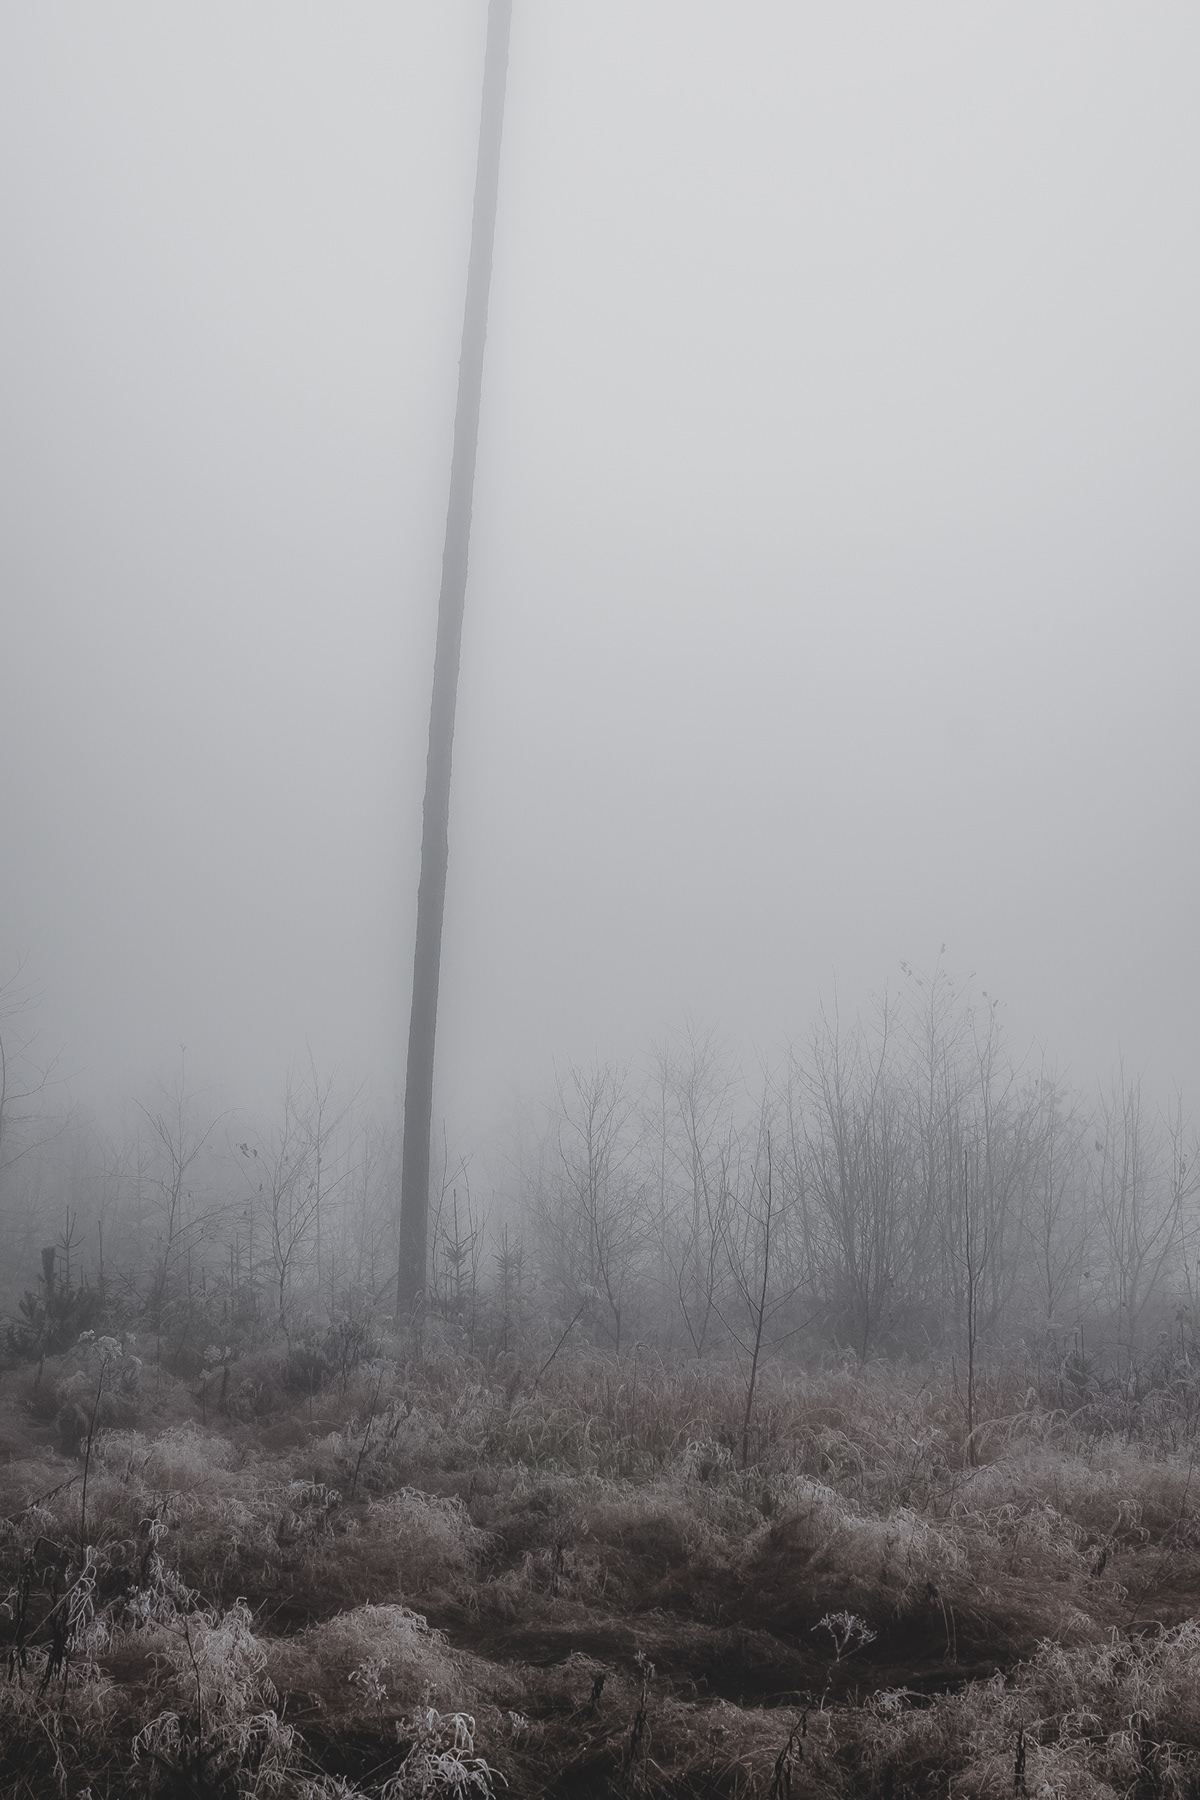 fog foggy mist misty forest trees atmosphere mood mysterious solitude